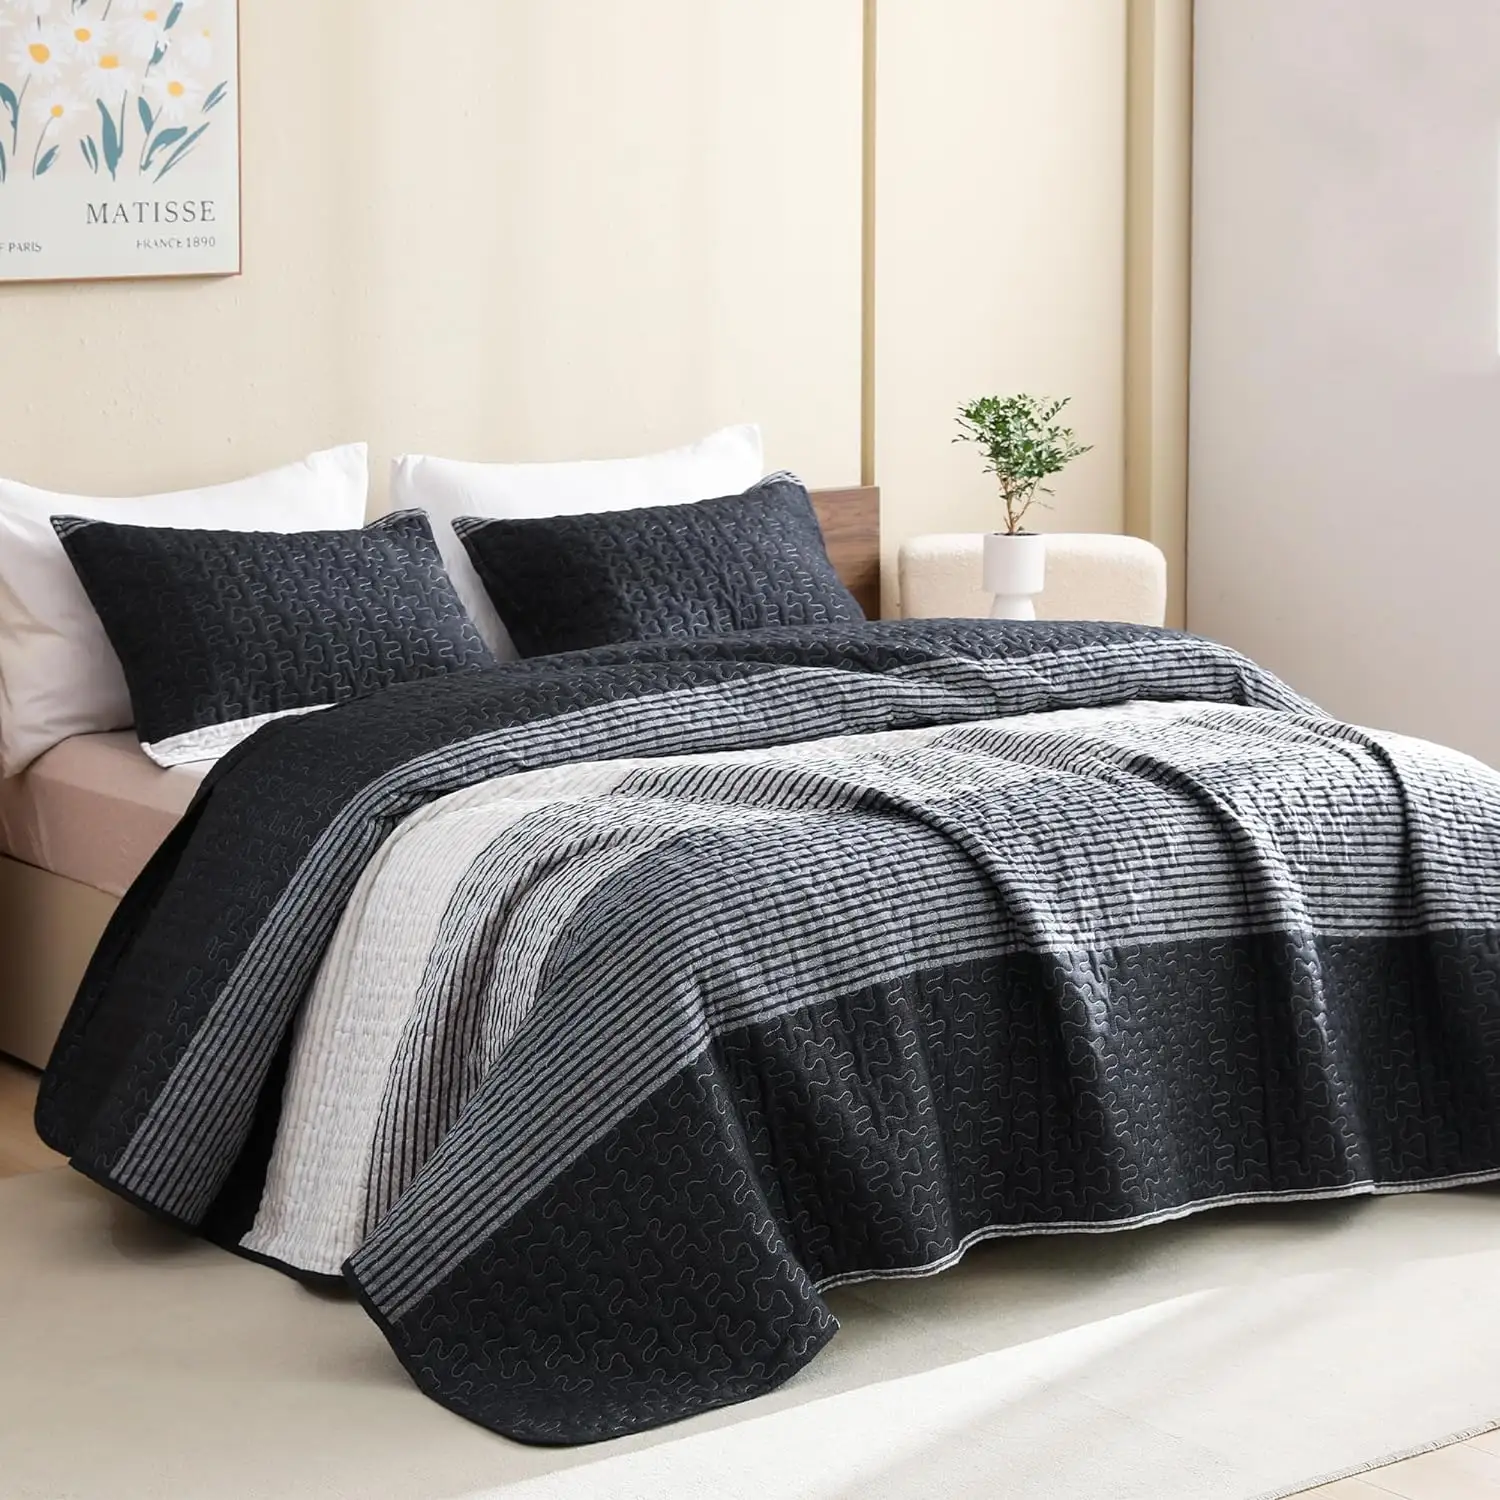 Queen Microfiber Quilt Set Soft Lightweight Summer Coverlet with Stripe Patchwork 3 Piece Bedspread Bedding